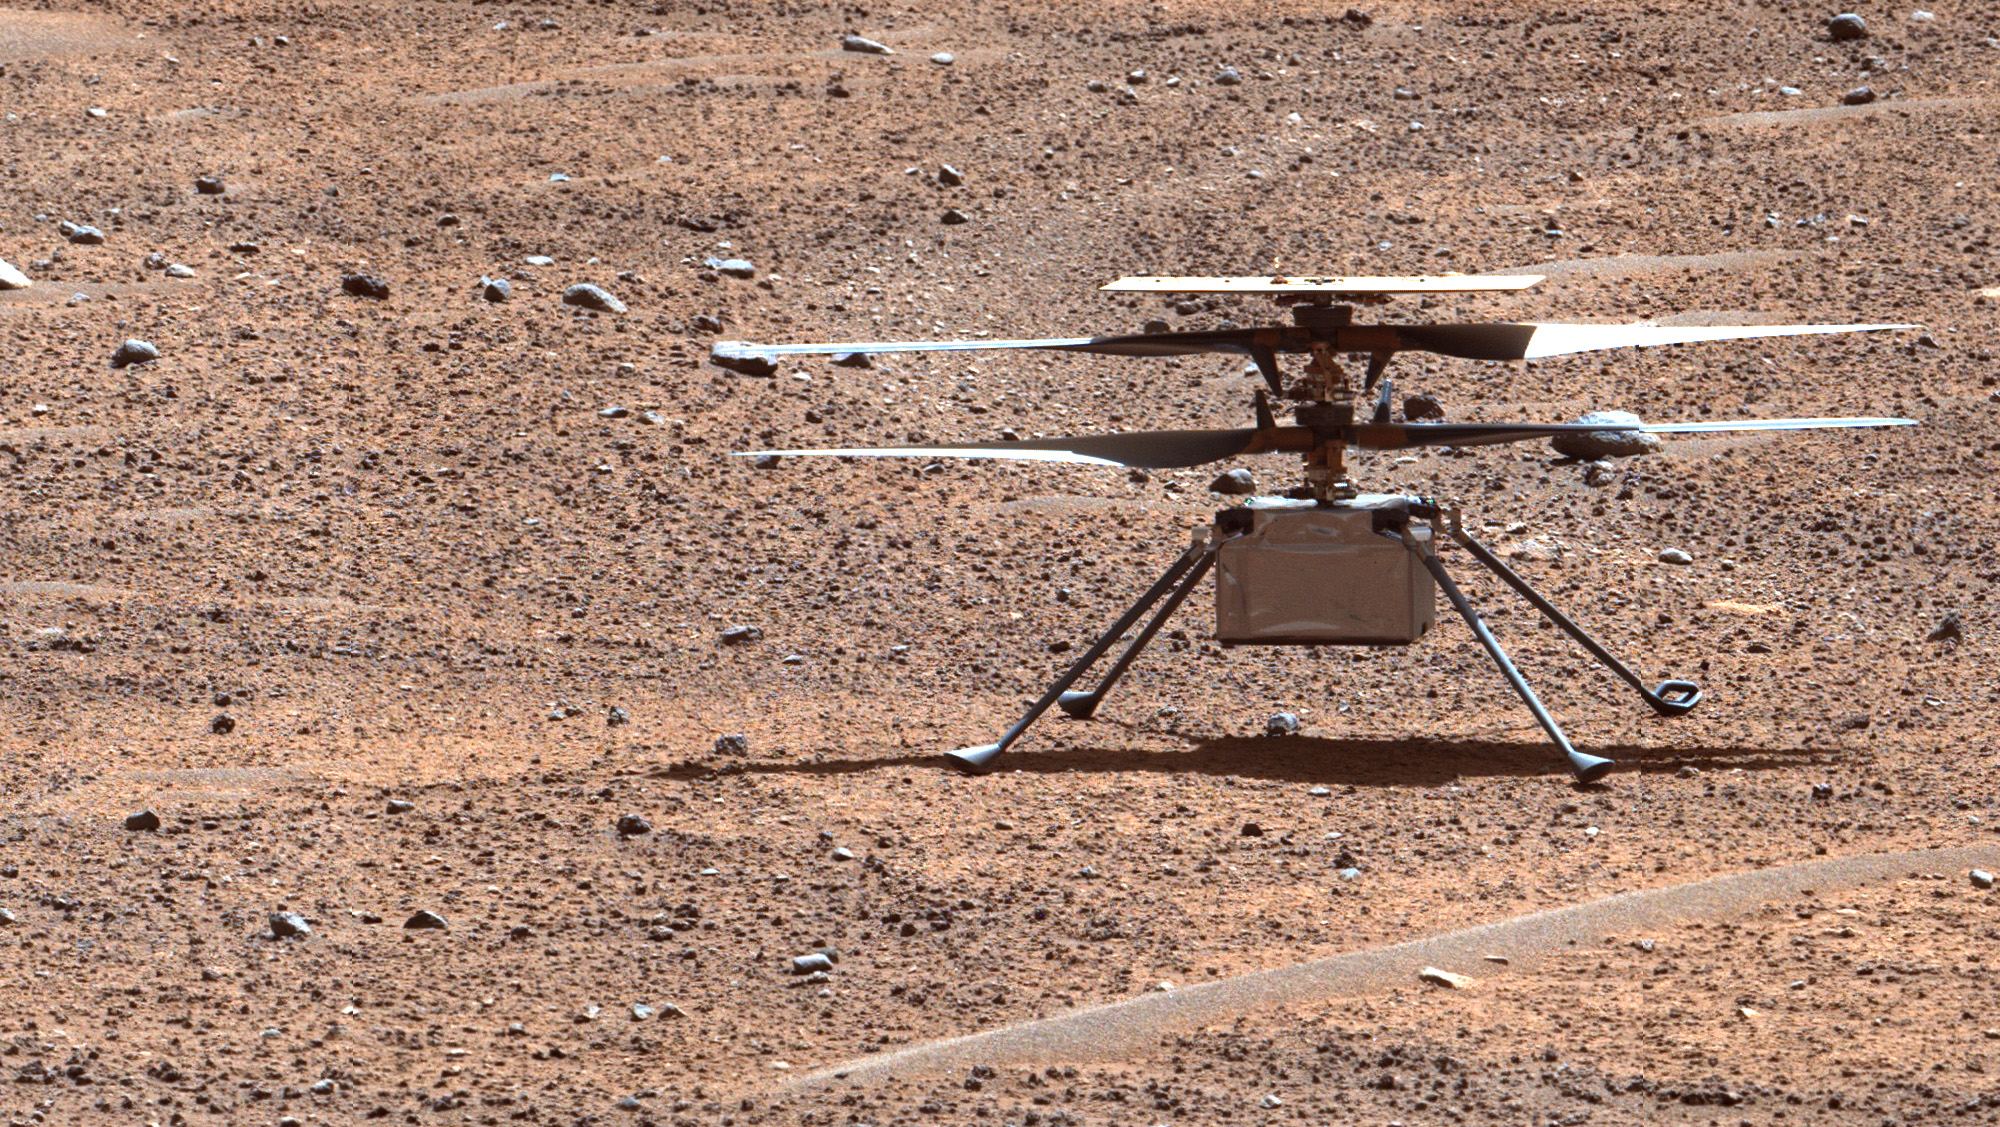 Ingenuity stood on the surface fo Mars